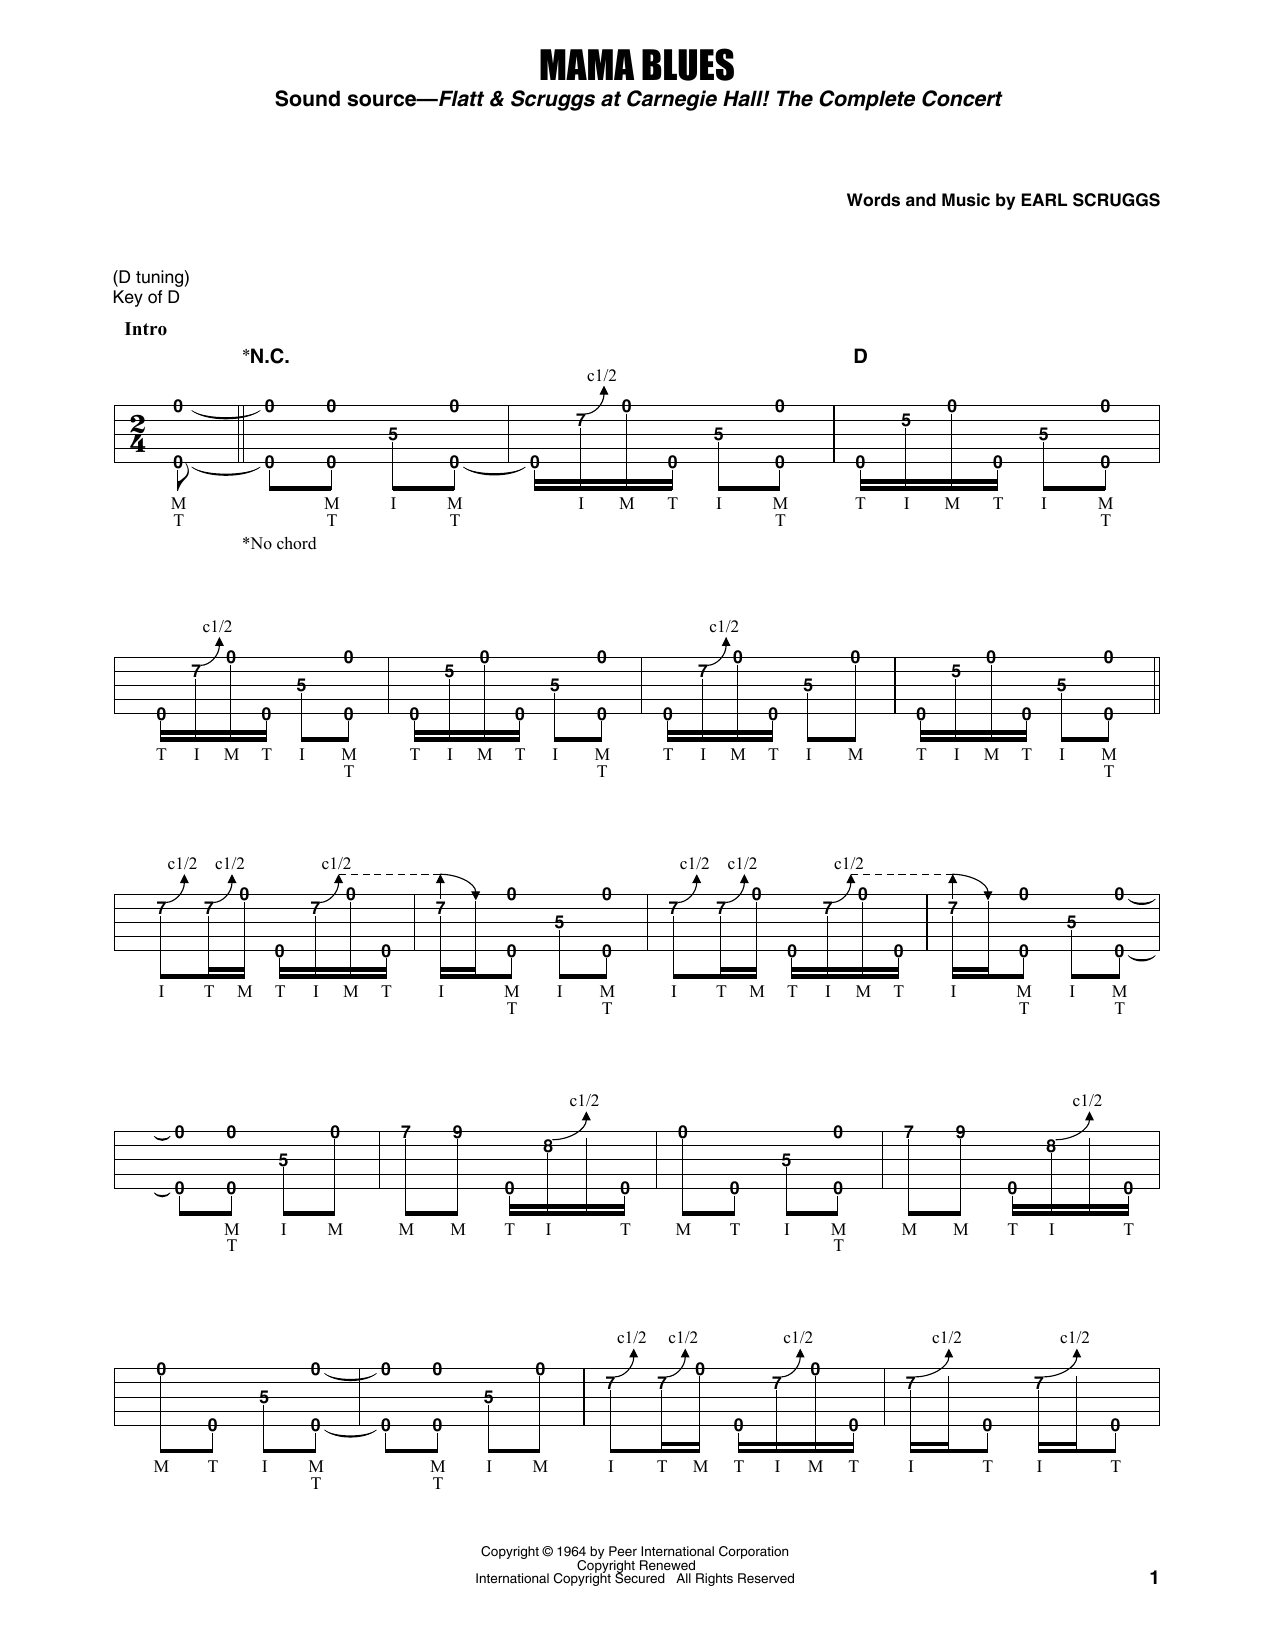 Flatt & Scruggs Mama Blues Sheet Music Notes & Chords for Banjo Tab - Download or Print PDF